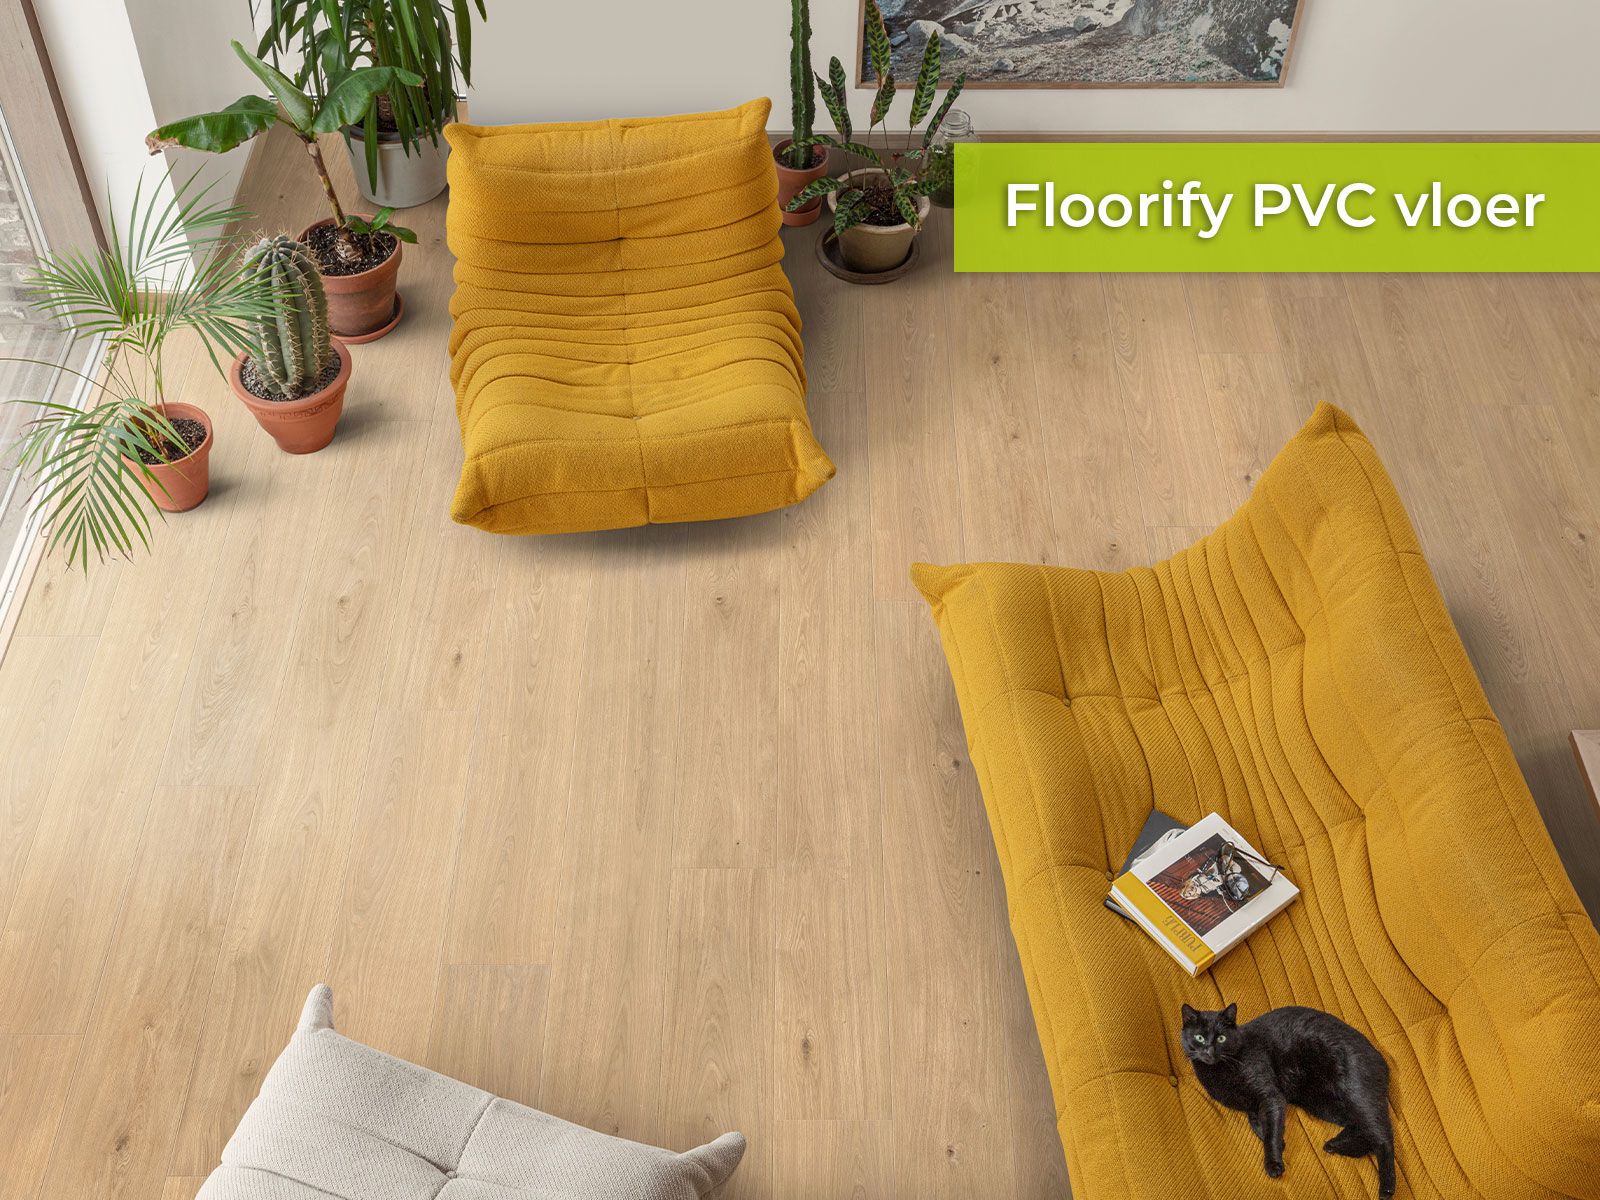 Floorify PVC vloer